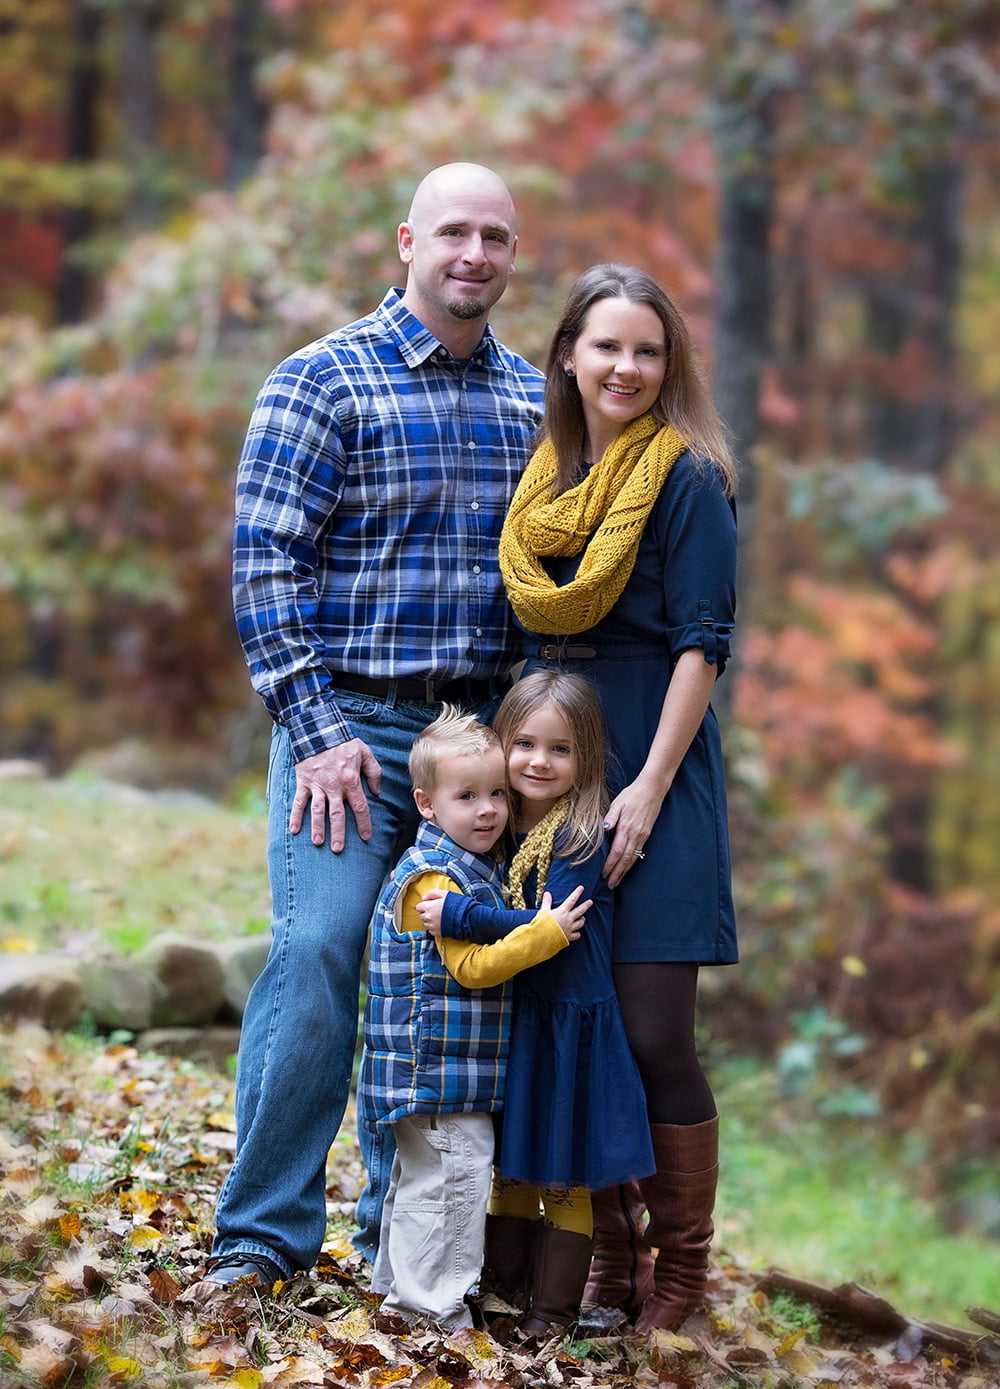 Jordan Dupree, BSN and Family